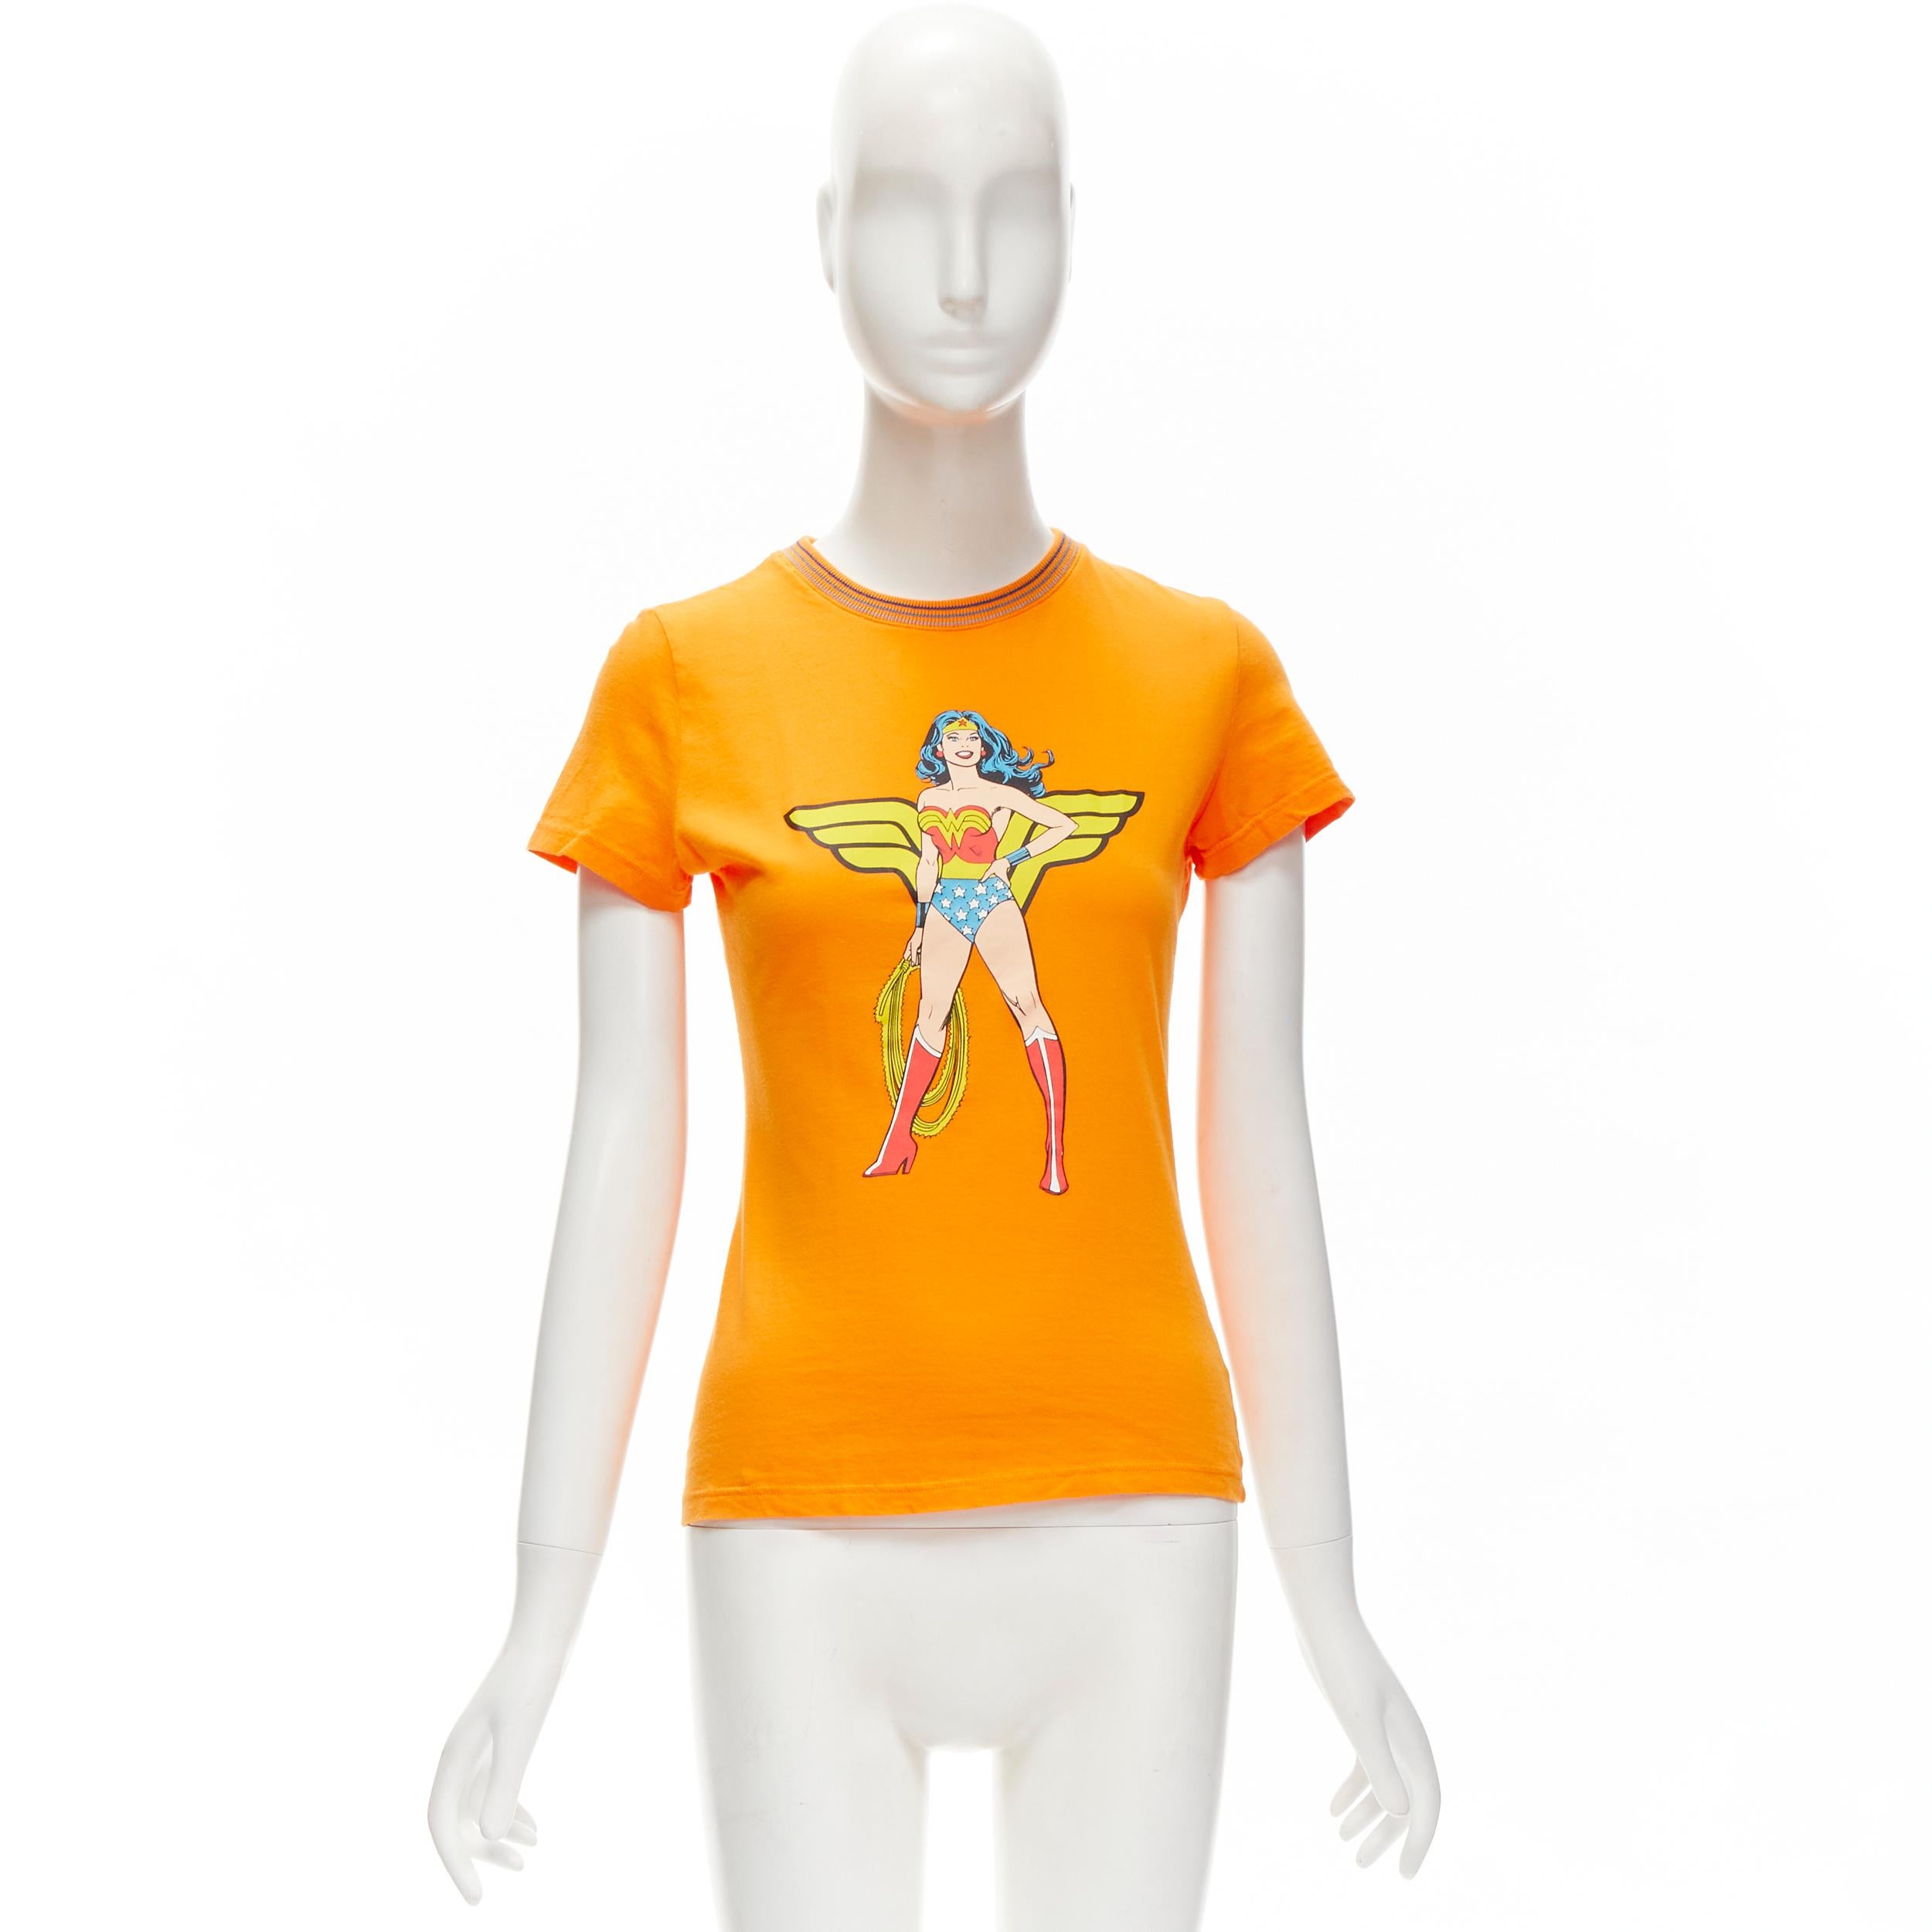 D&G DOLCE GABBANA Limited Edition Wonder Woman print orange cotton tshirt  XS 2